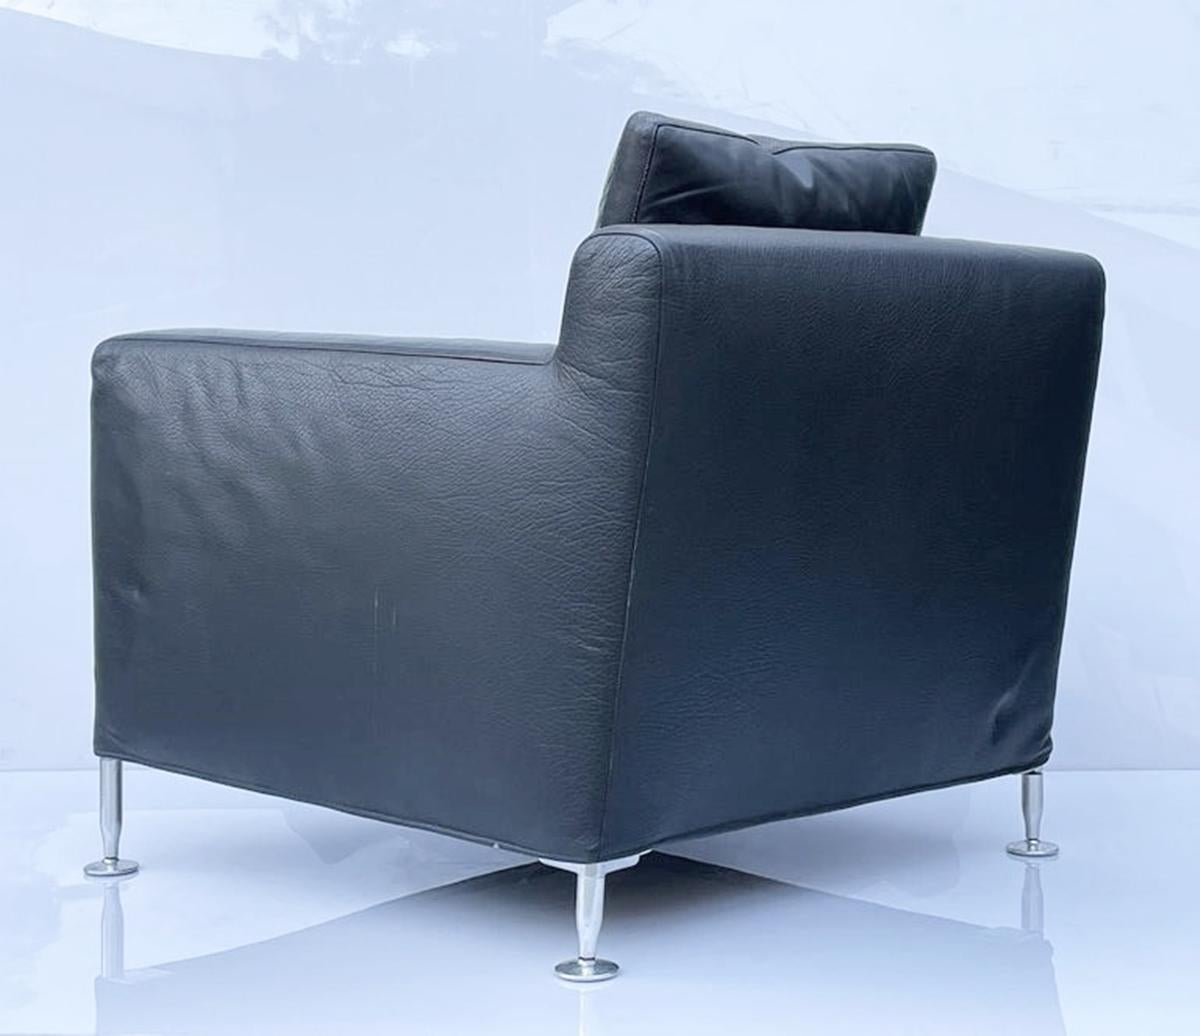 Modern Harry Arm / Club Chair in Black Leather by Antonio Citterio for B&B Italia